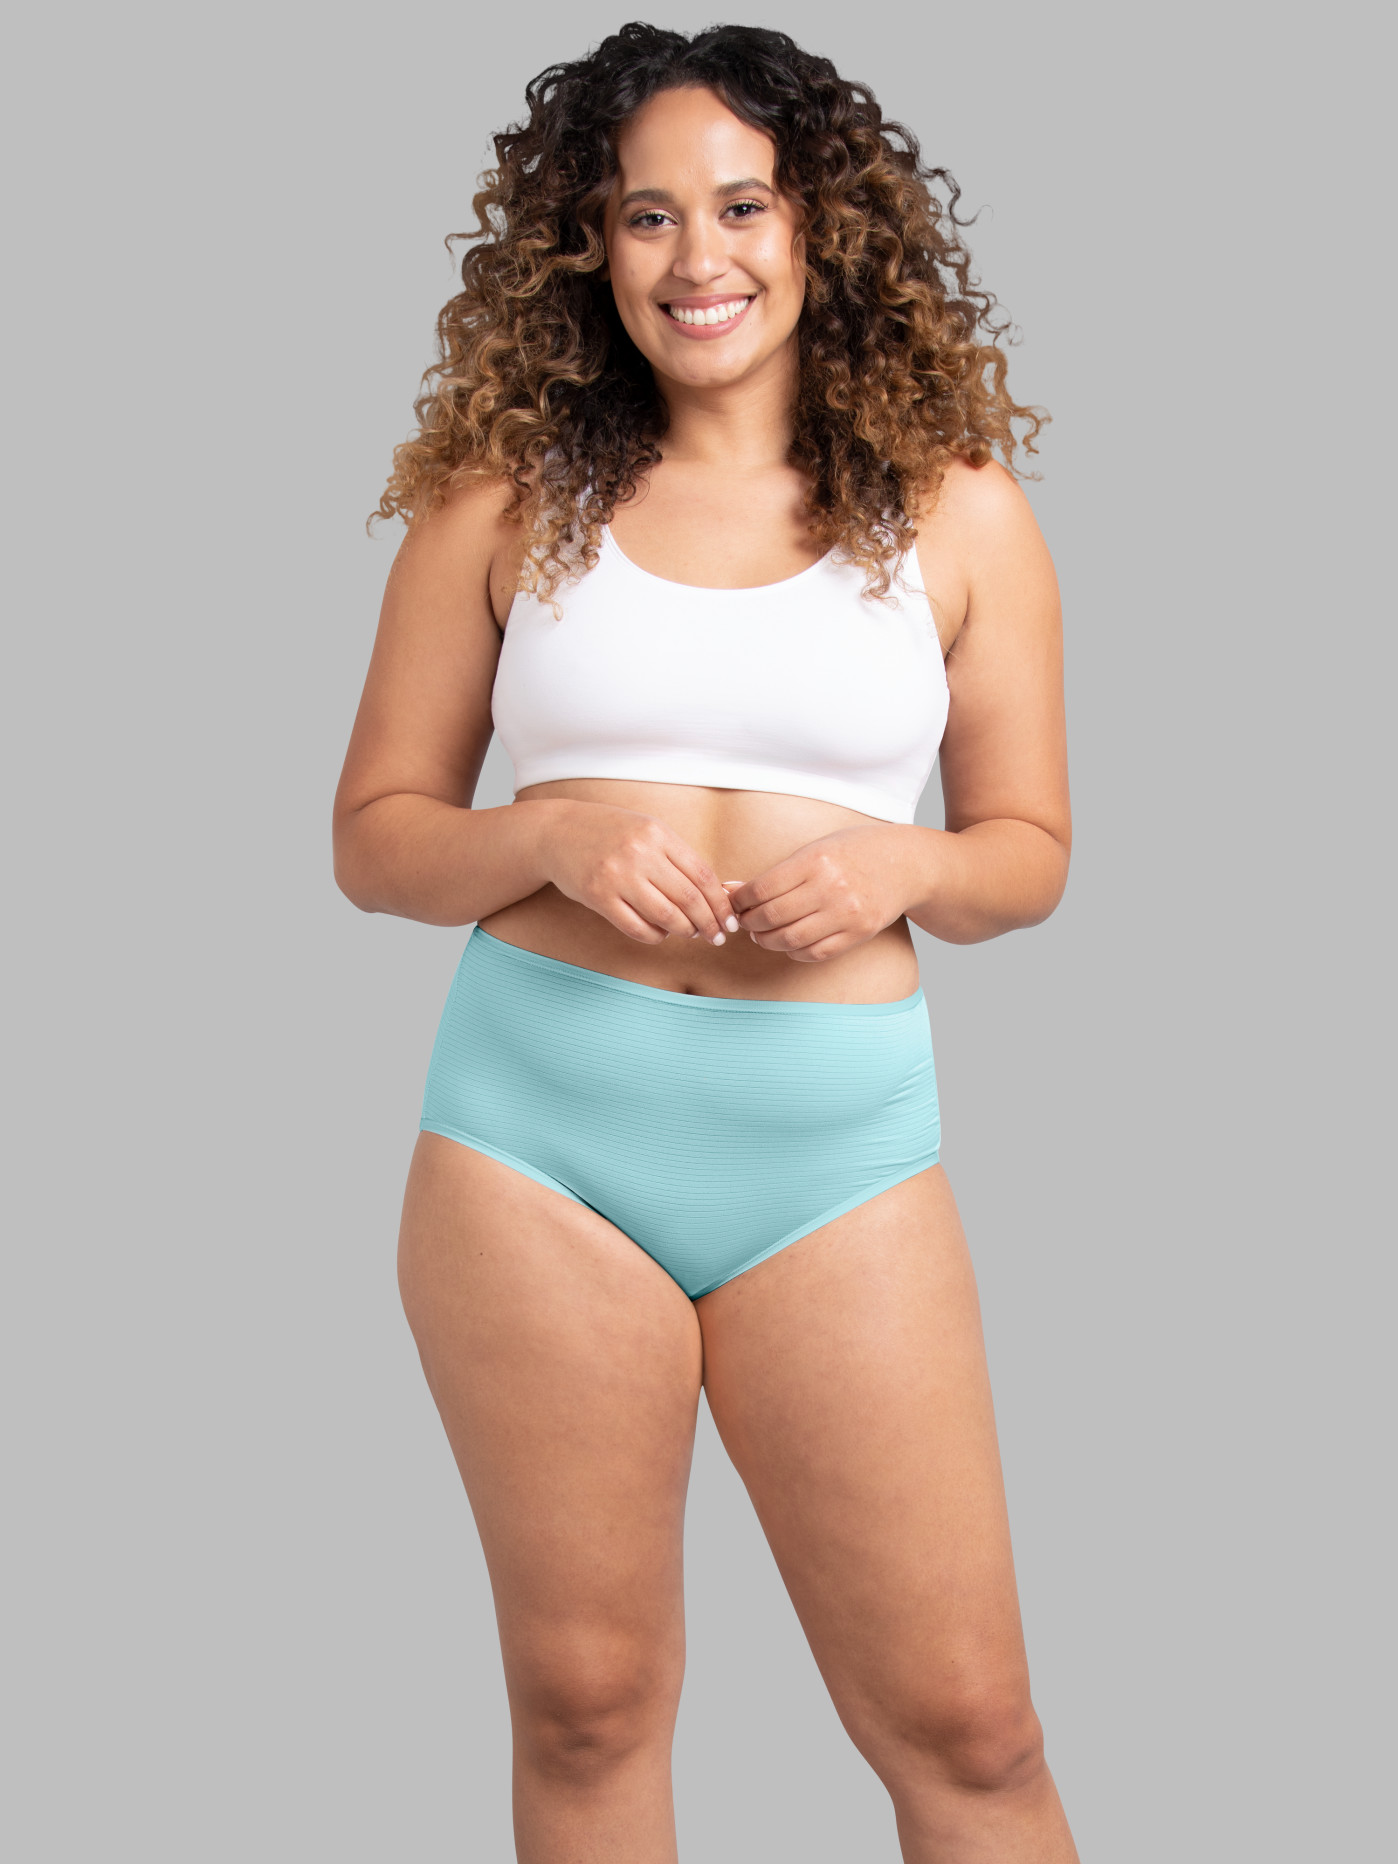 girl underwear stock photos - OFFSET